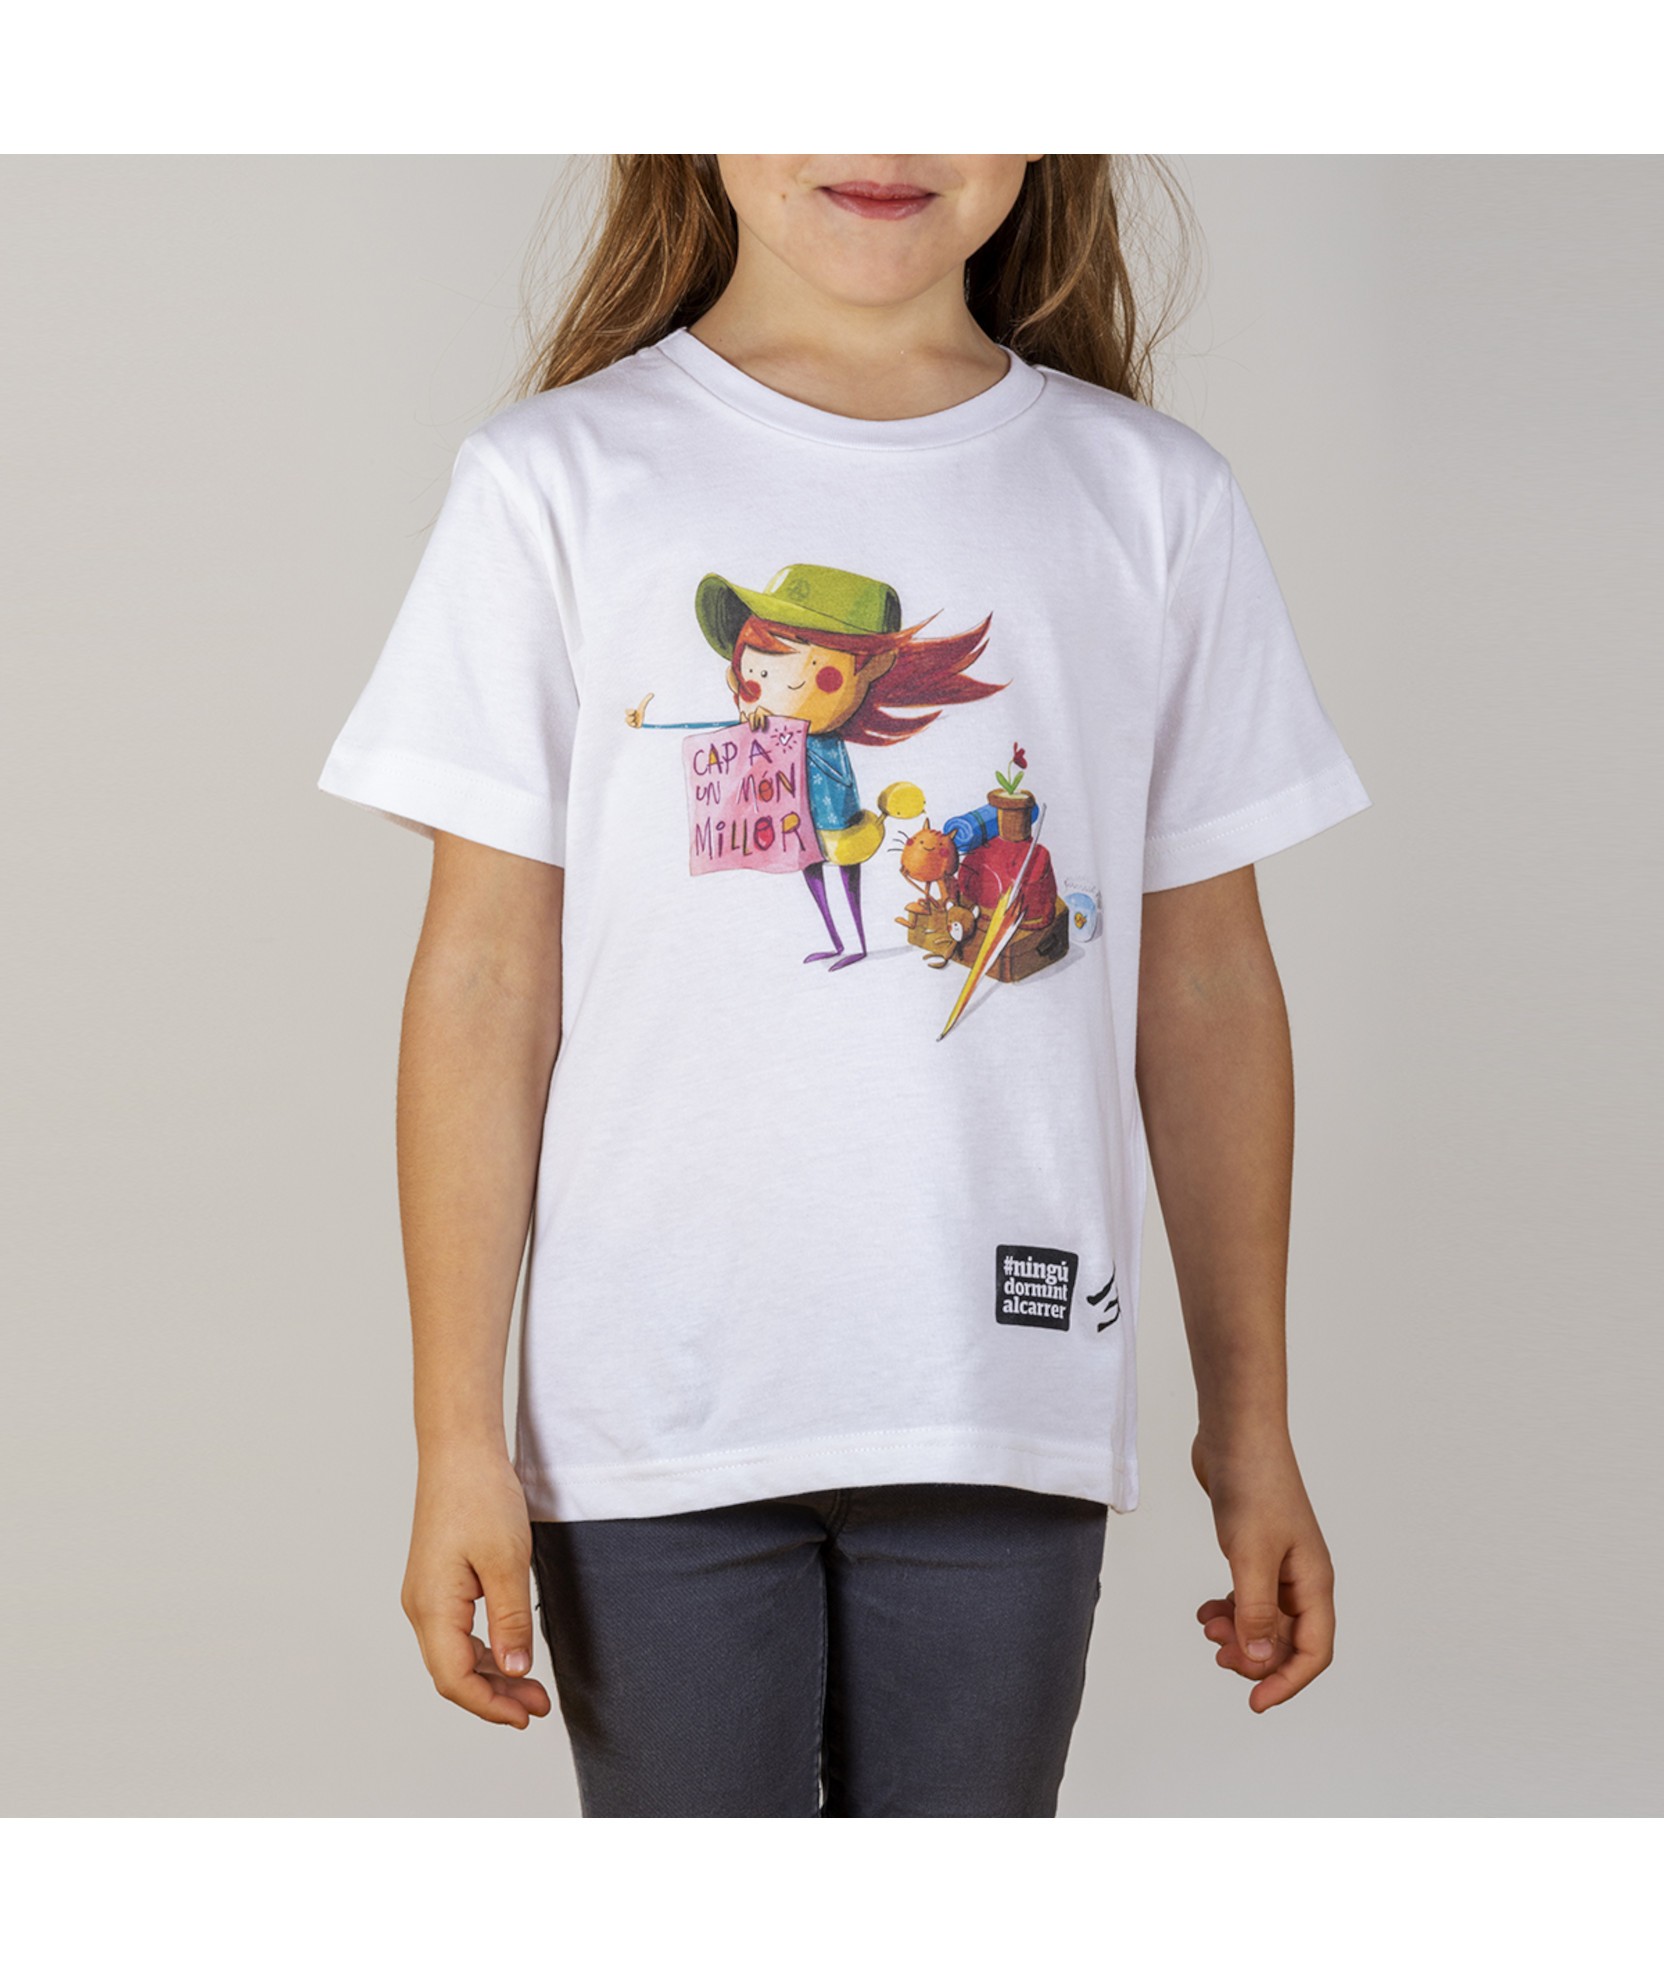 Berri excusa Extremo Camiseta infantil ilustrada por Joan Turu